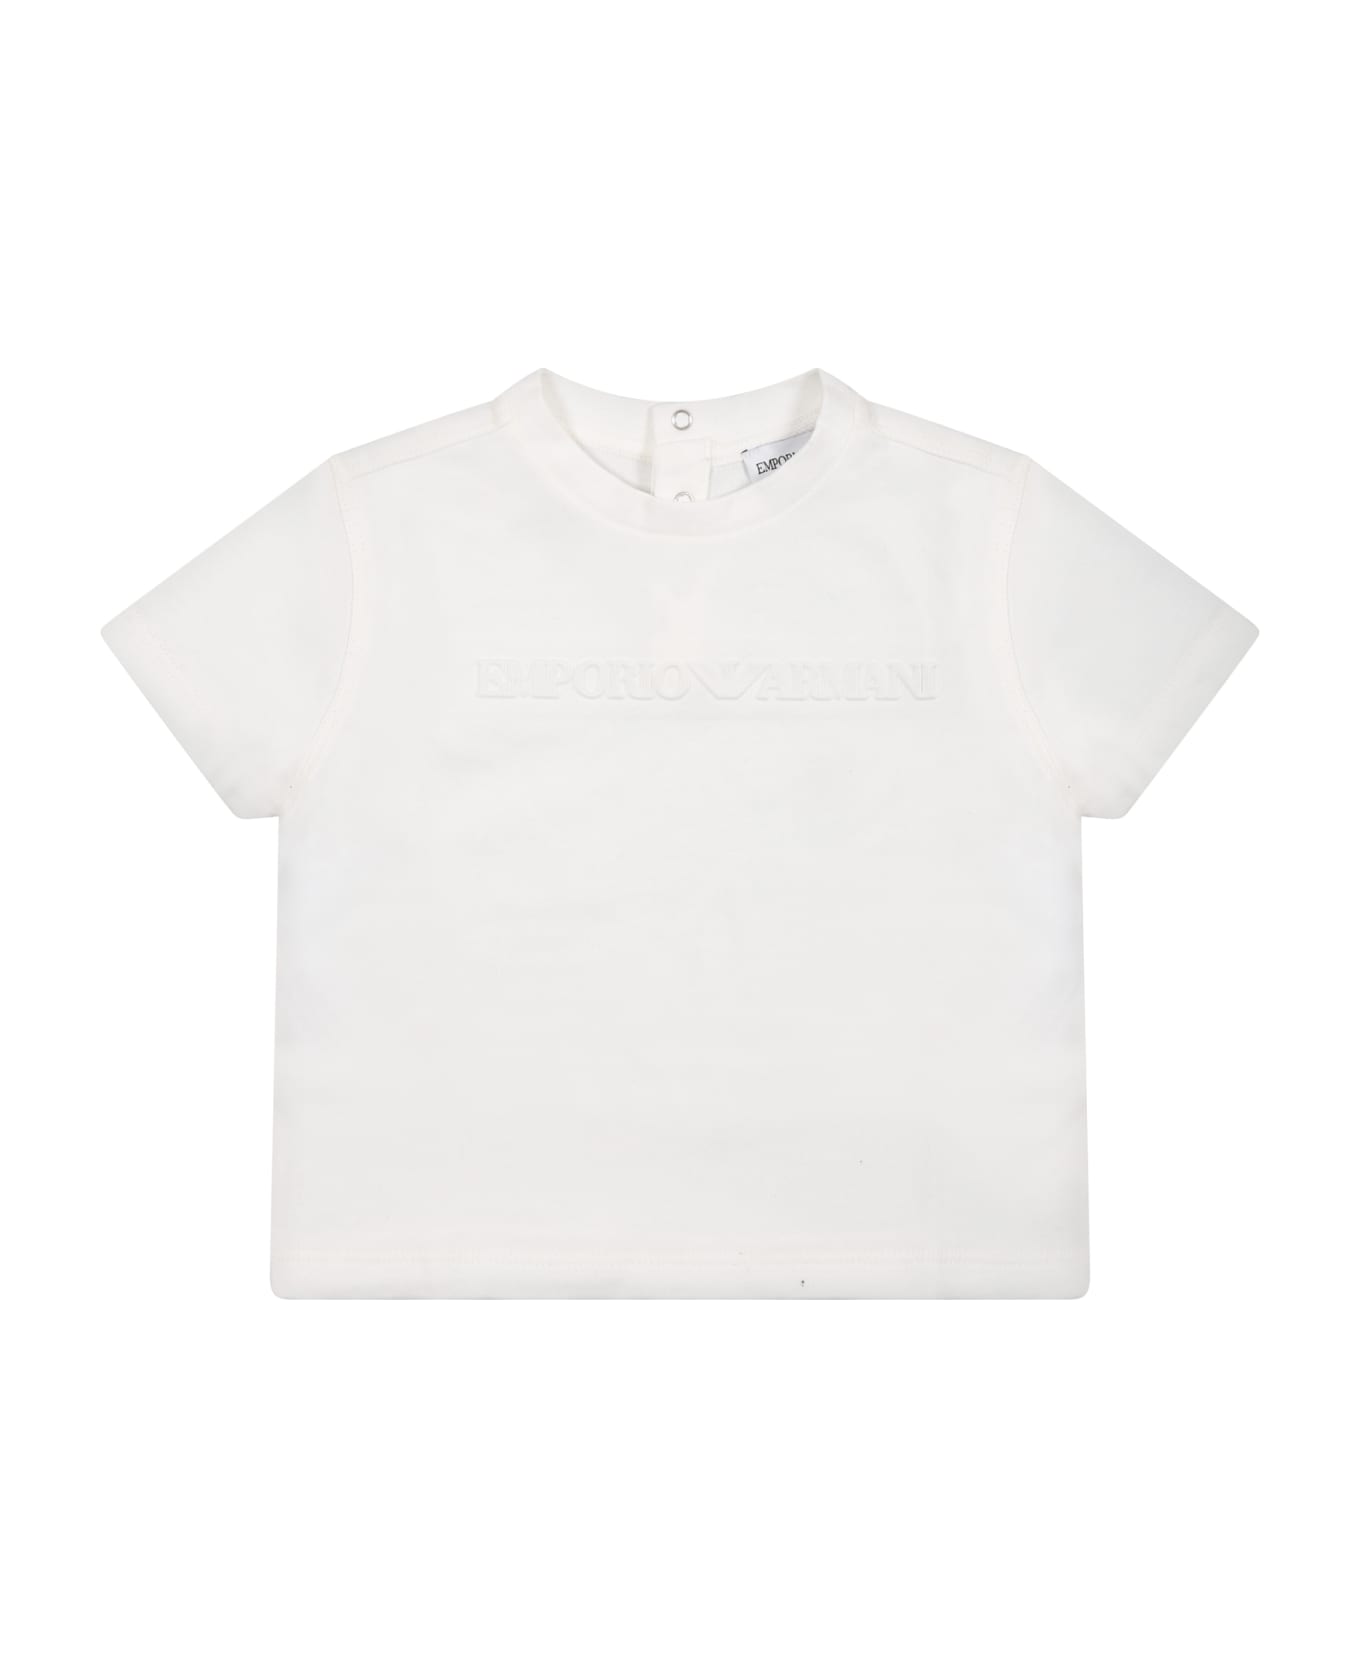 Armani Collezioni White T-shirt For Boaby Boy With Originals Eaglet - White